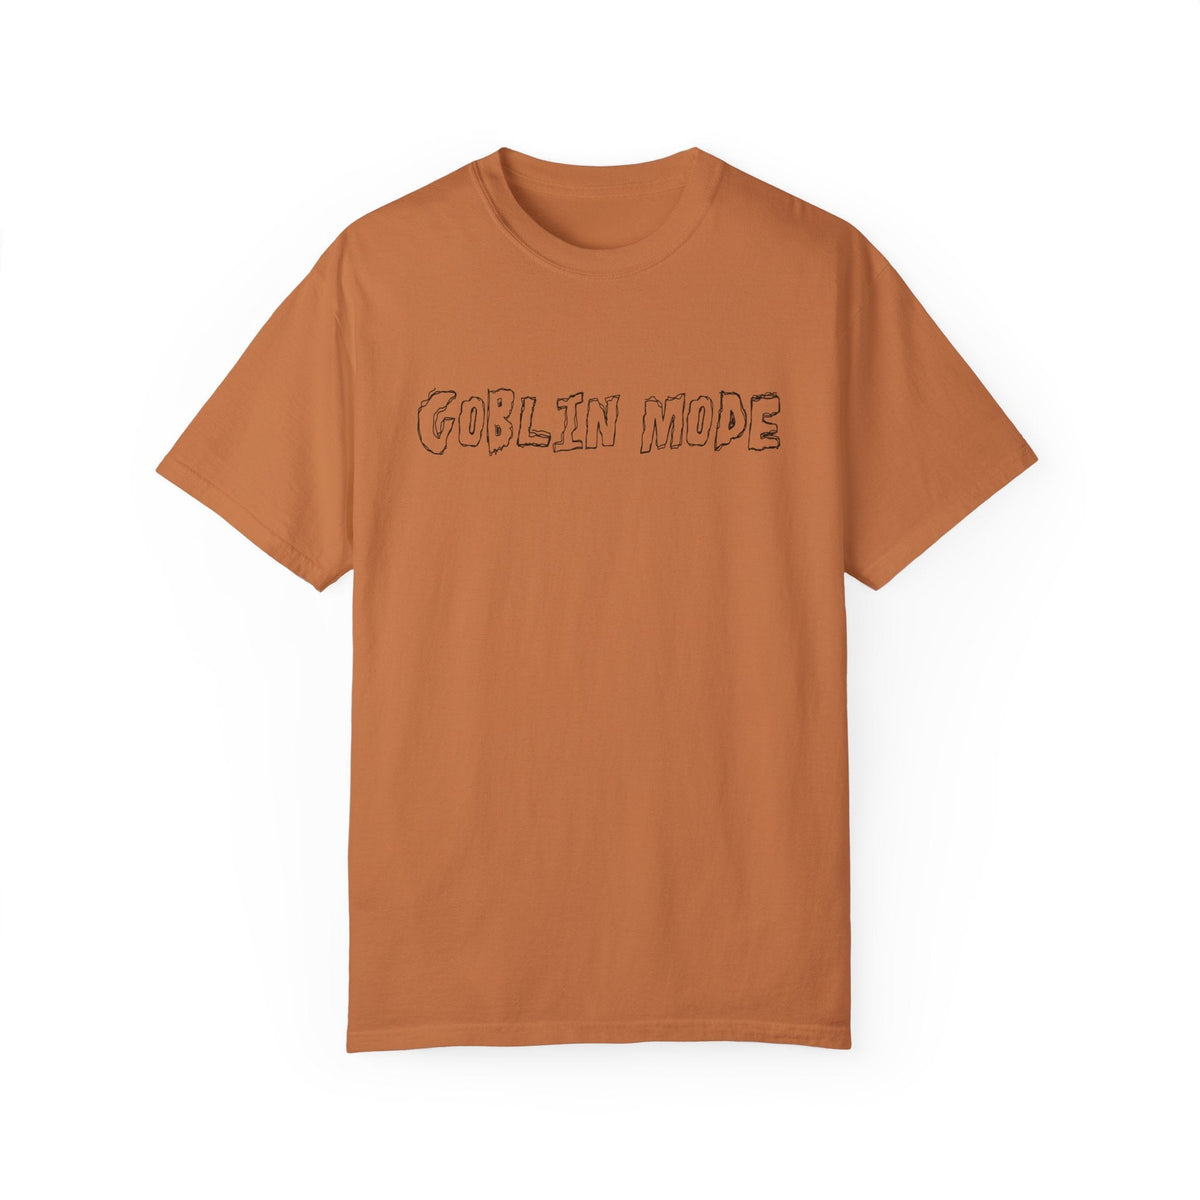 Goblin Mode Comfy Tee - Goth Cloth Co.T - Shirt47299848181837184818